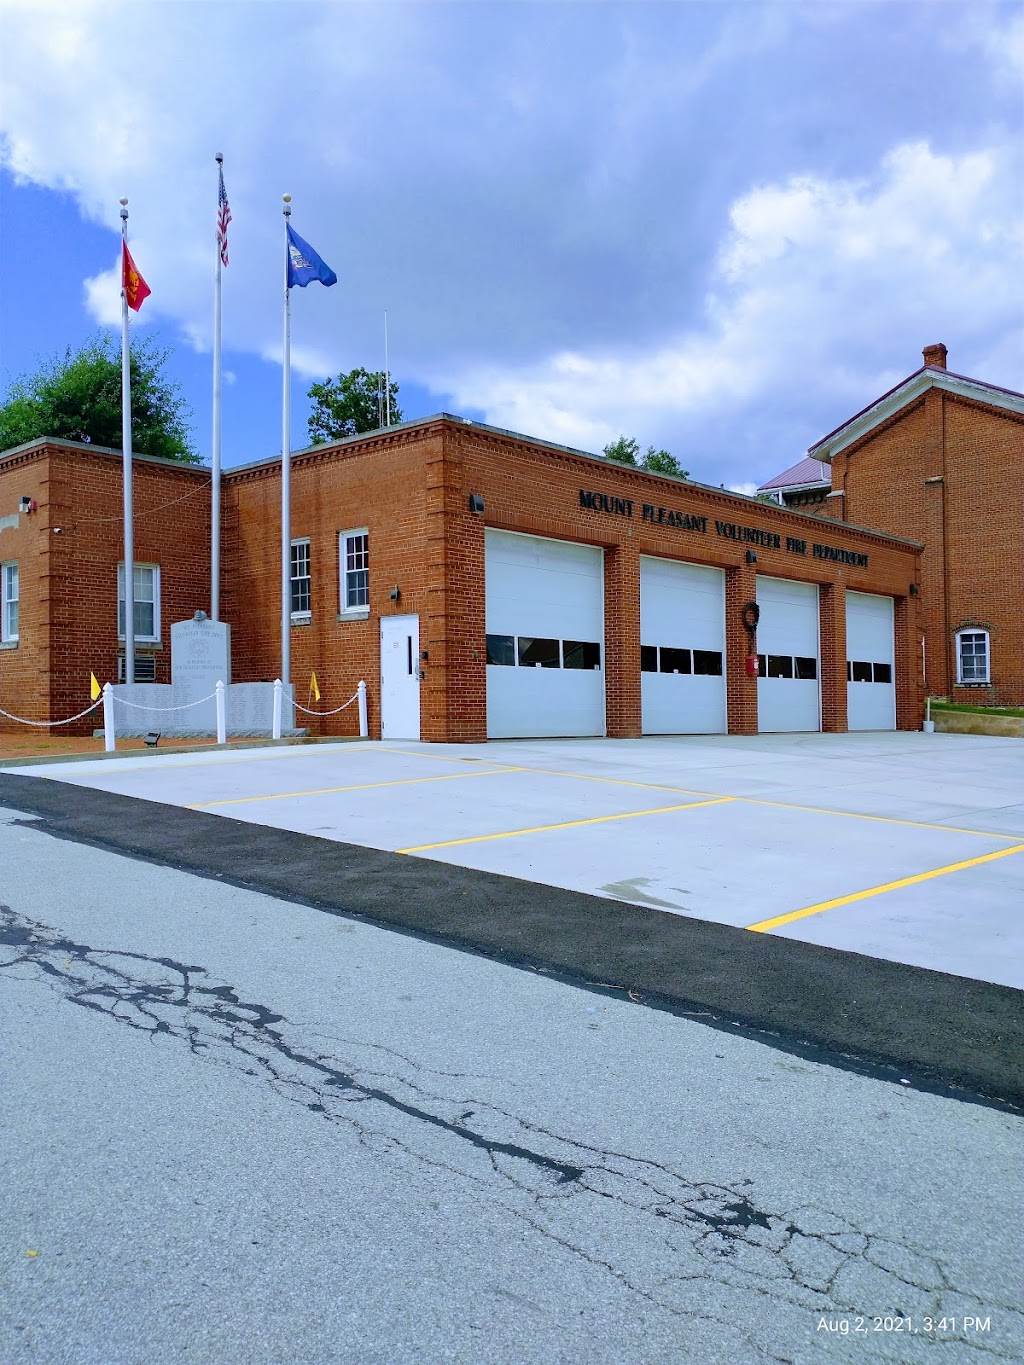 Mount Pleasant Volunteer Fire Department | 100 S Church St, Mt Pleasant, PA 15666 | Phone: (724) 547-8818